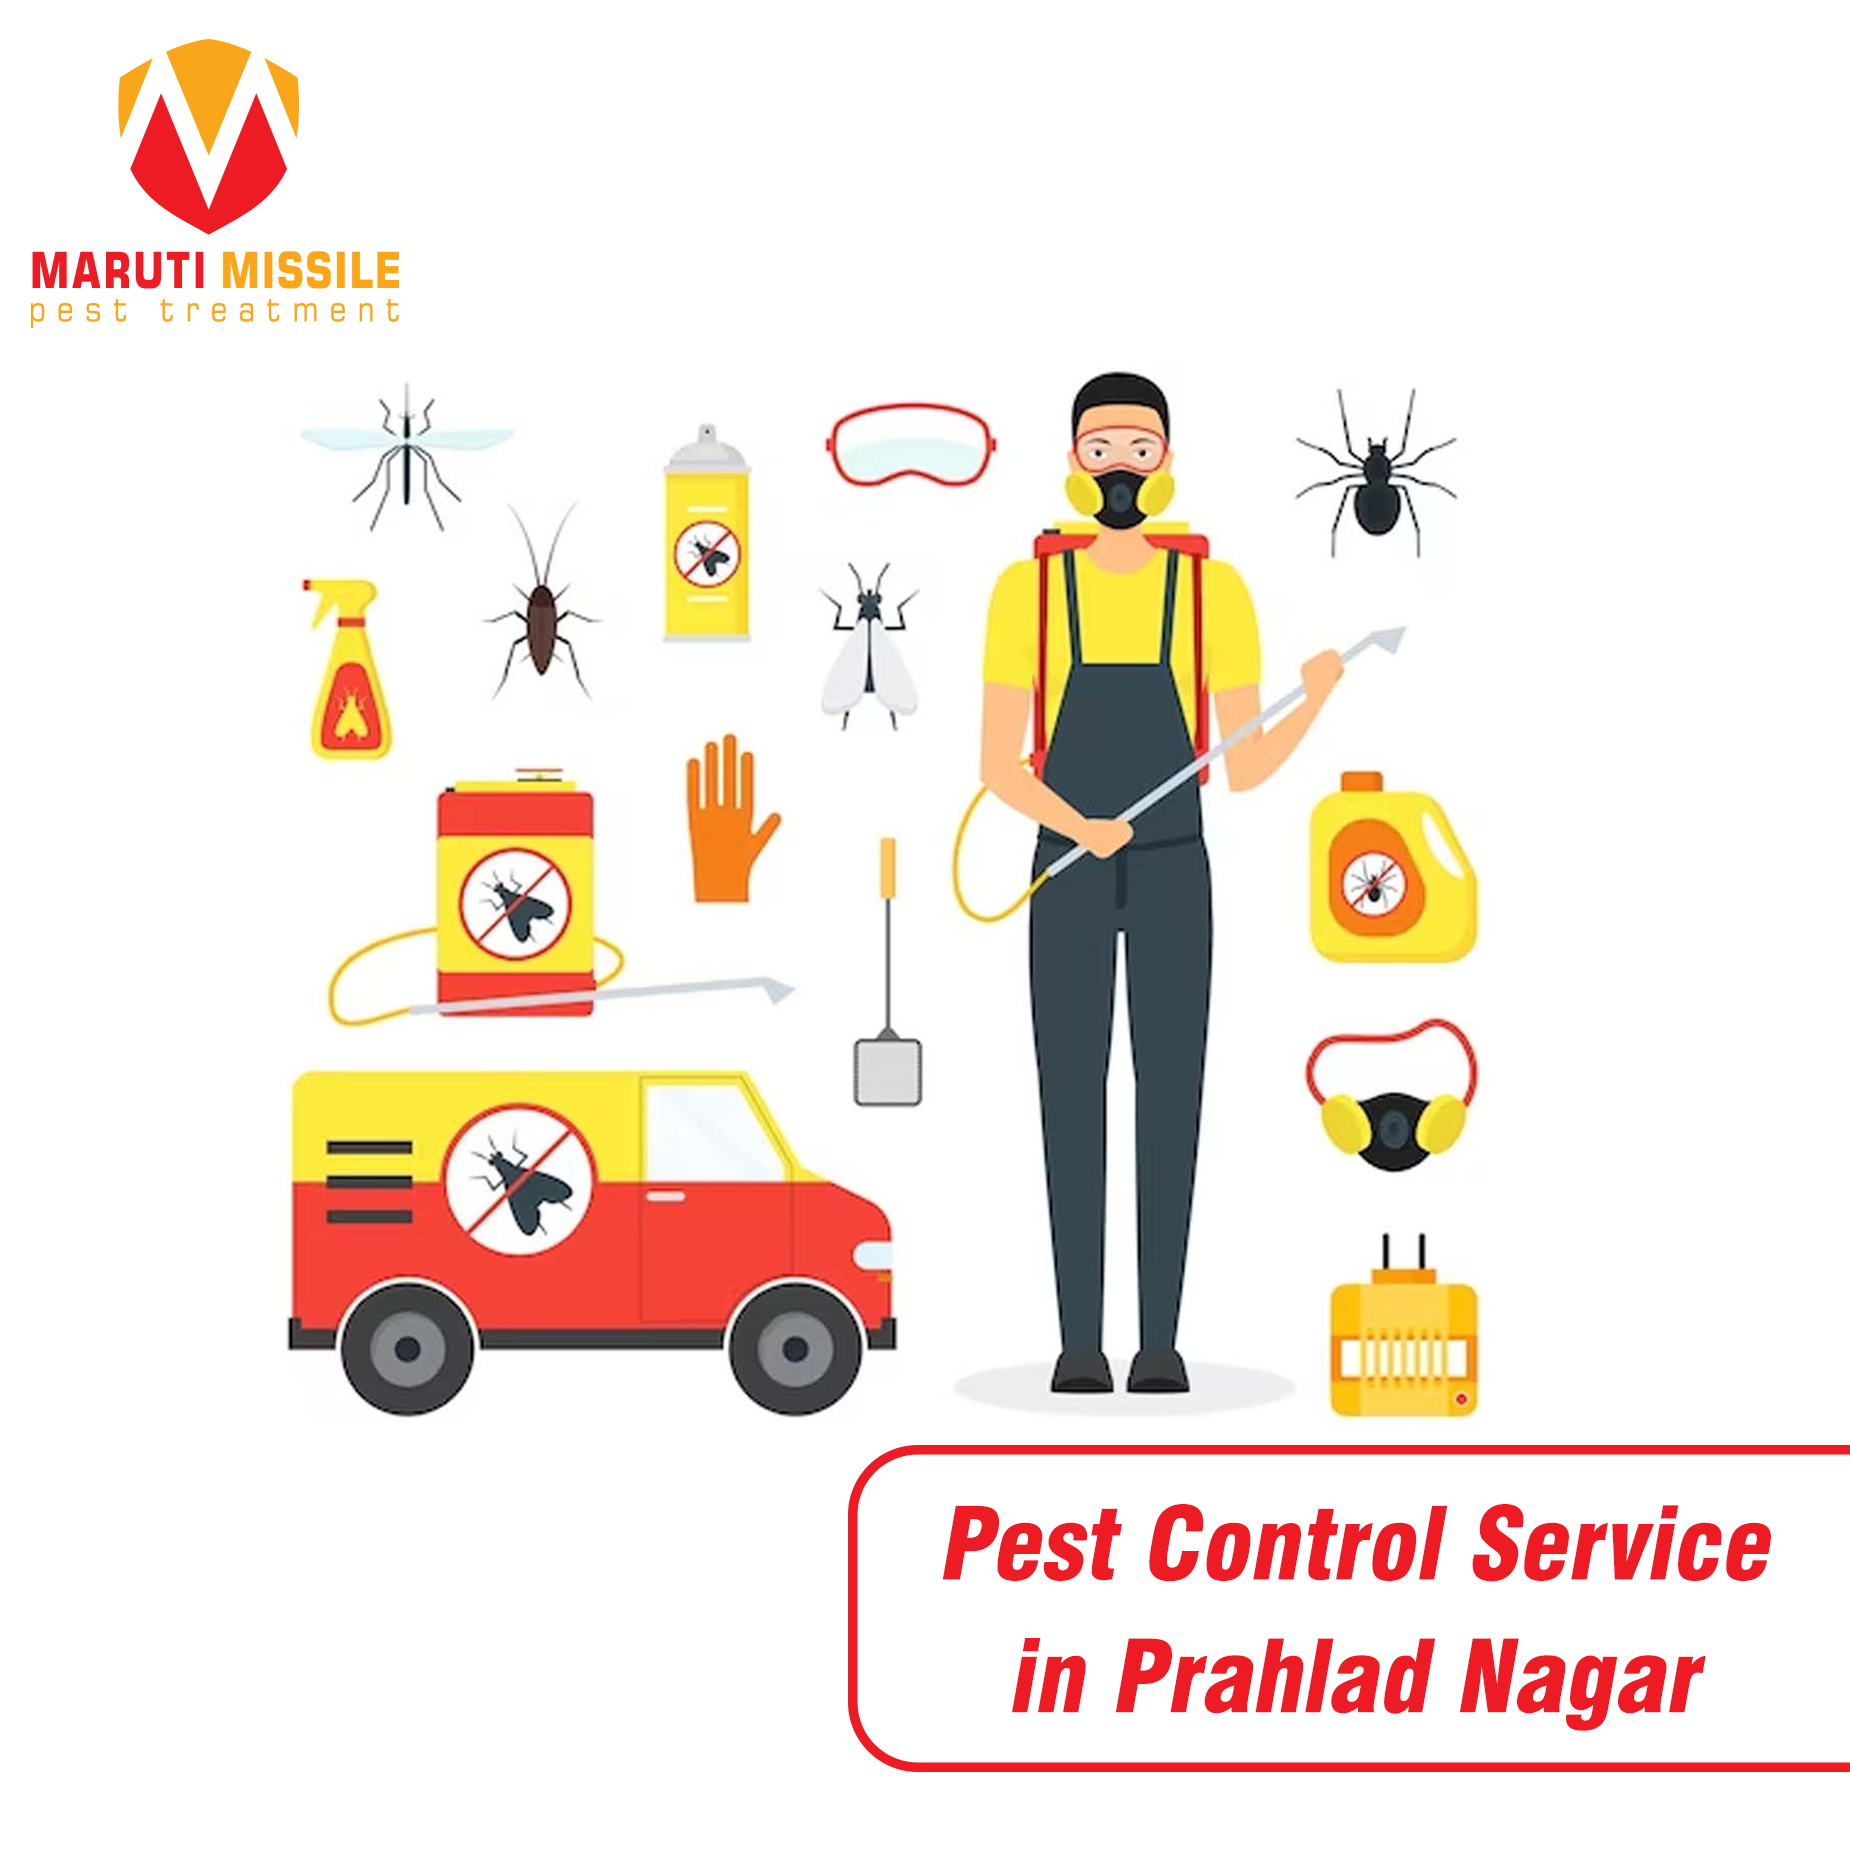 Pest Control Service in Prahlad Nagar